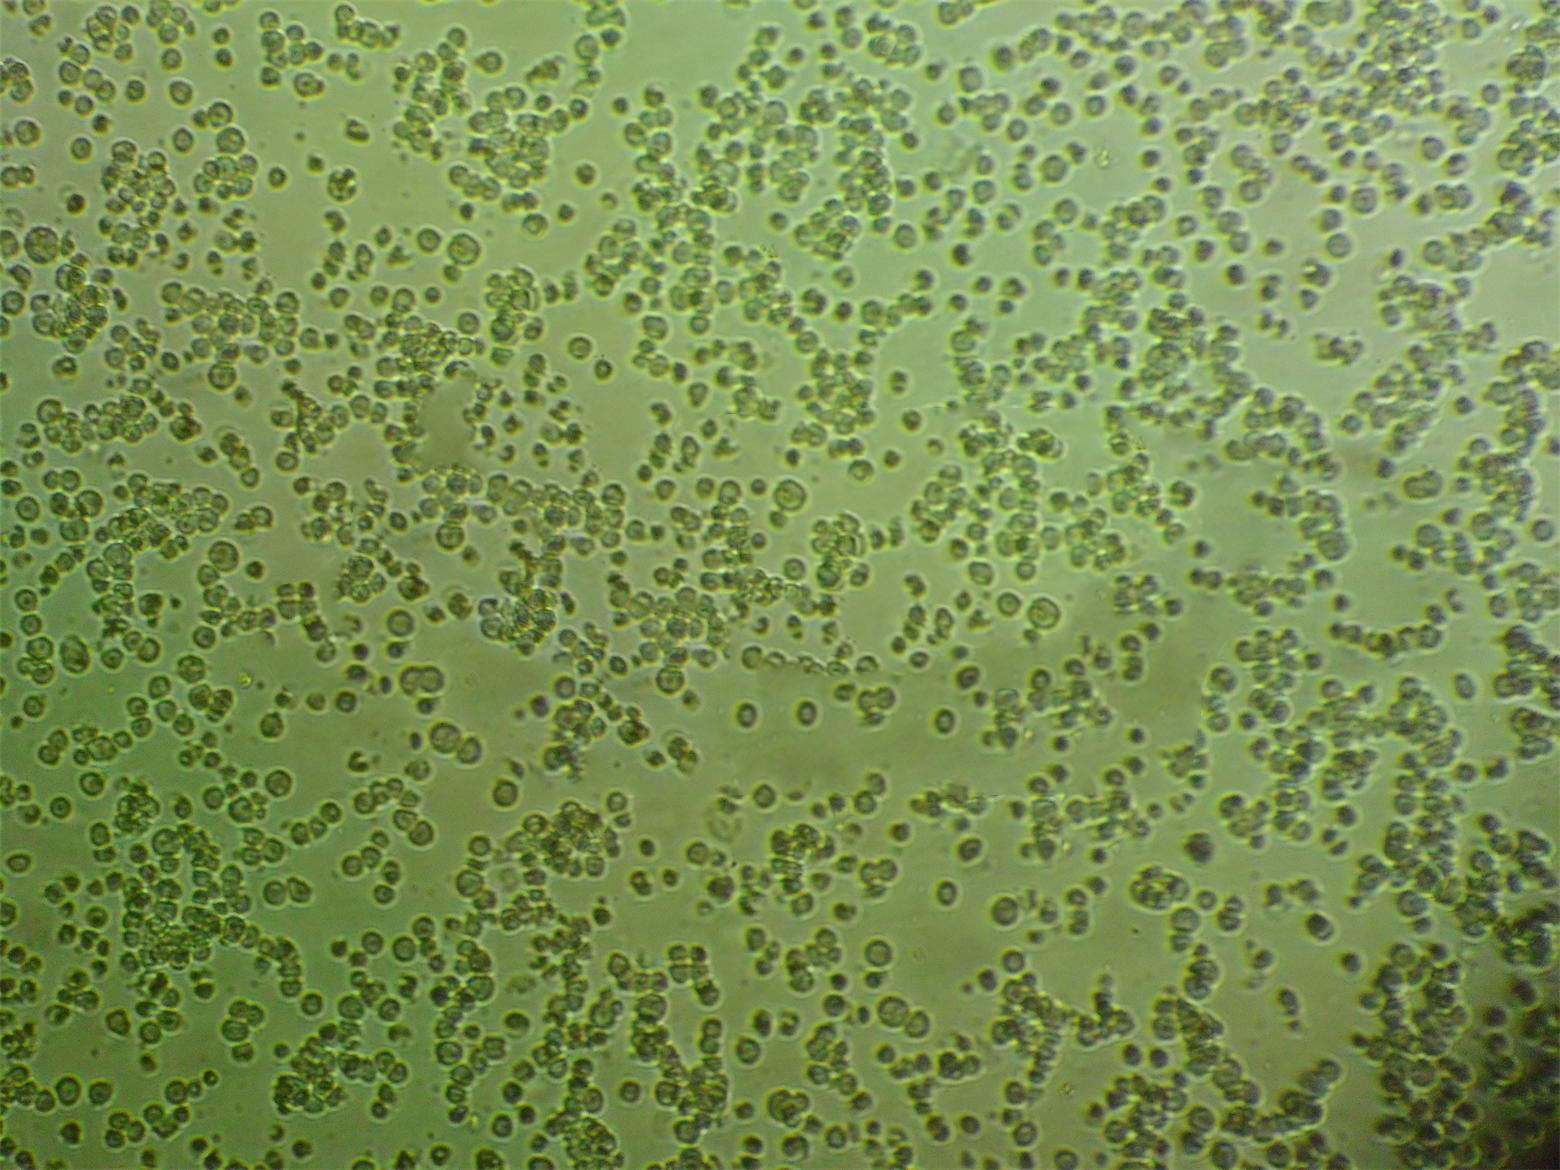 Kasumi-1 Cells|人红白血病可传代细胞系